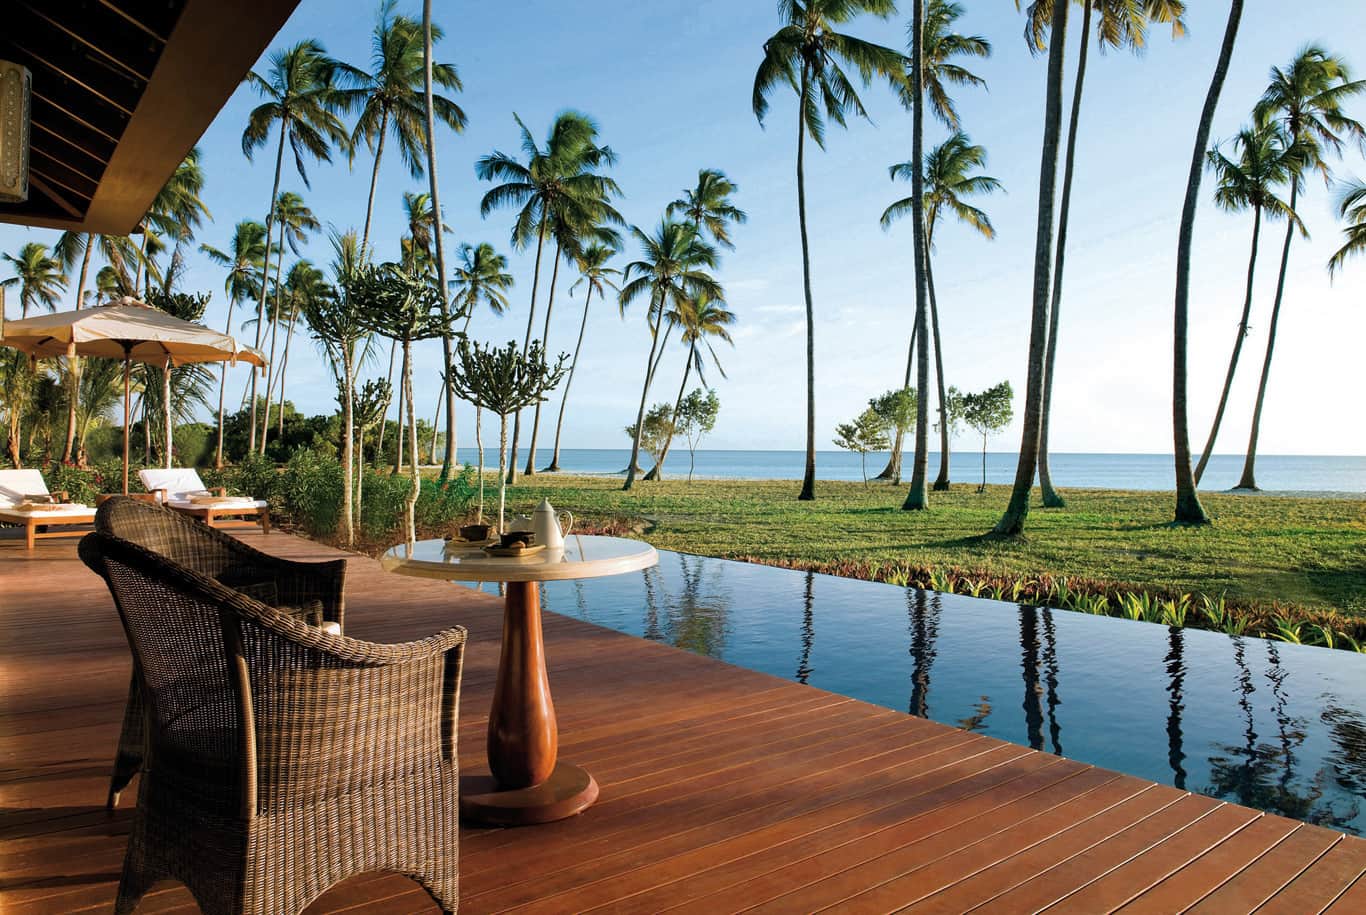 View over the sea from the villa terrace at The Residence Zanzibar in Tanzania